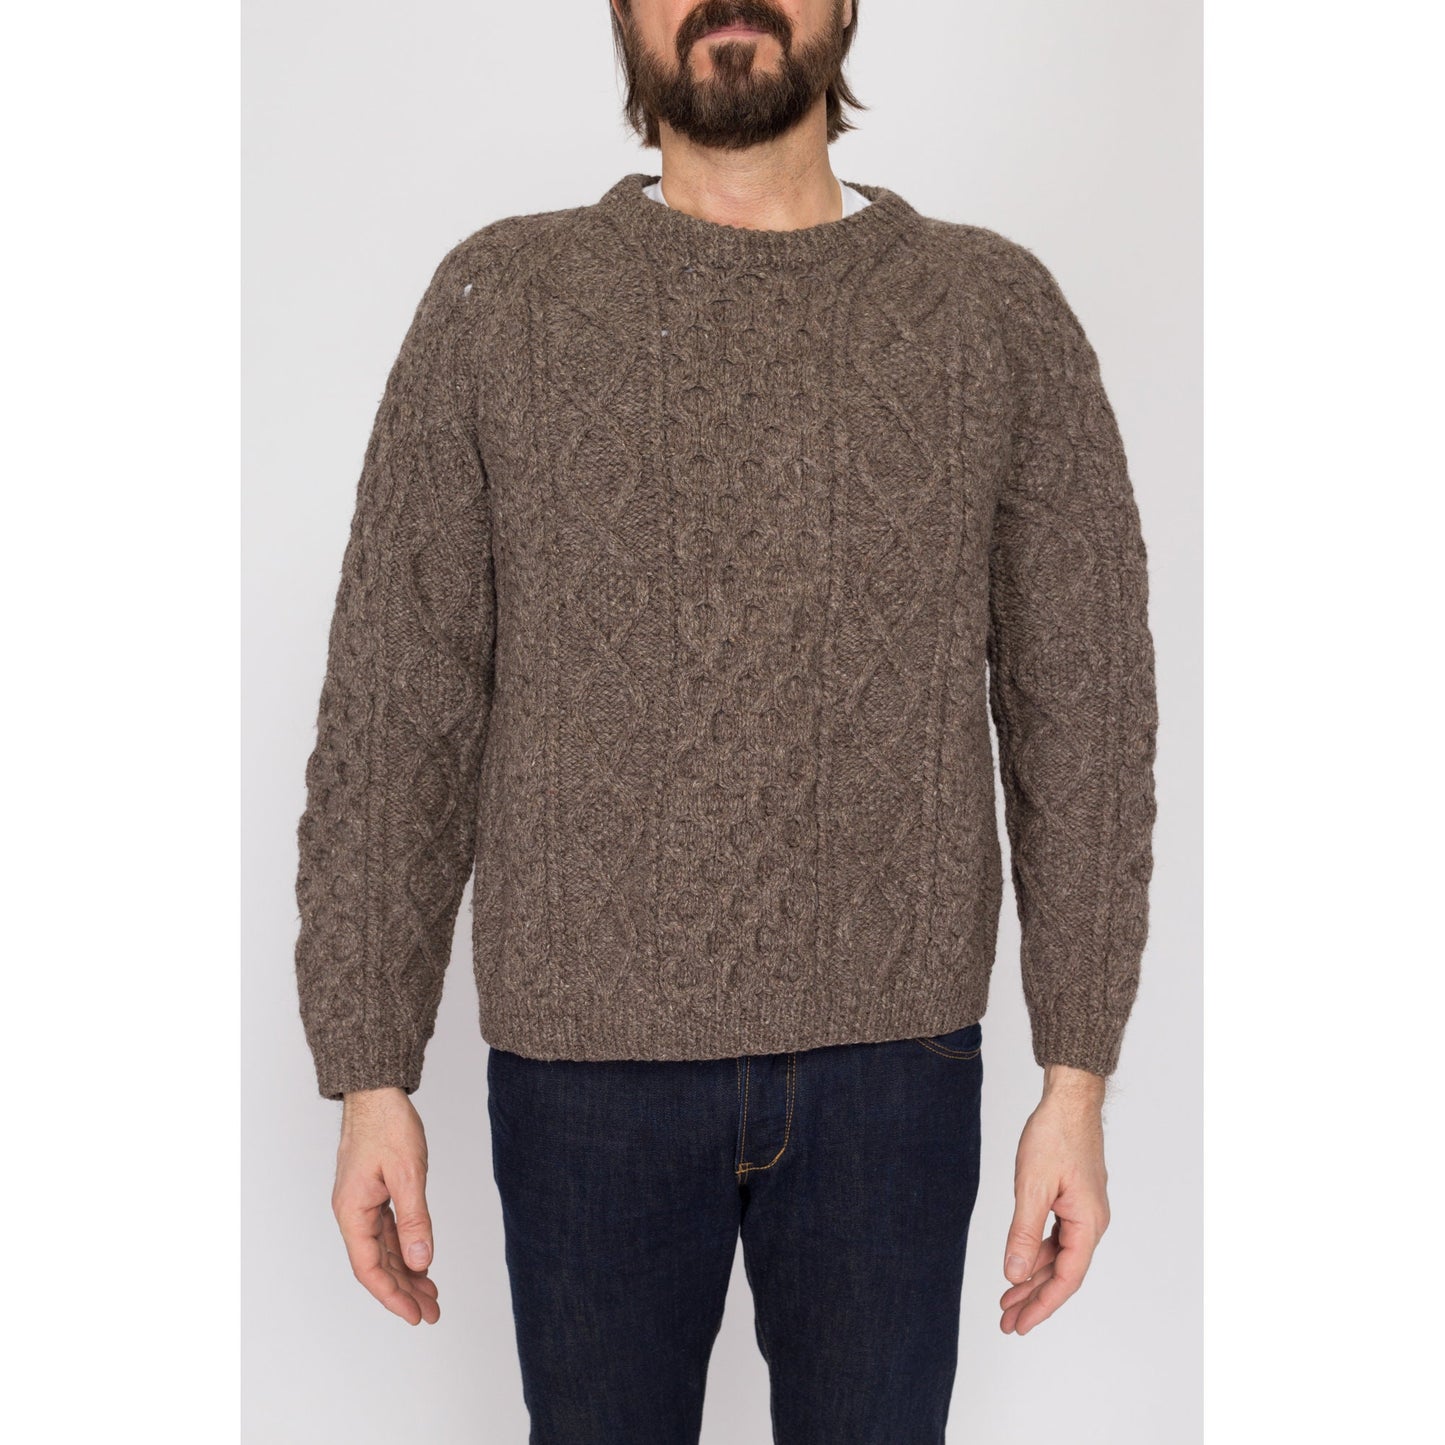 Medium 70s Aran Irish Taupe Cable Knit Fisherman Sweater | Vintage Chunky Wool Pullover Jumper